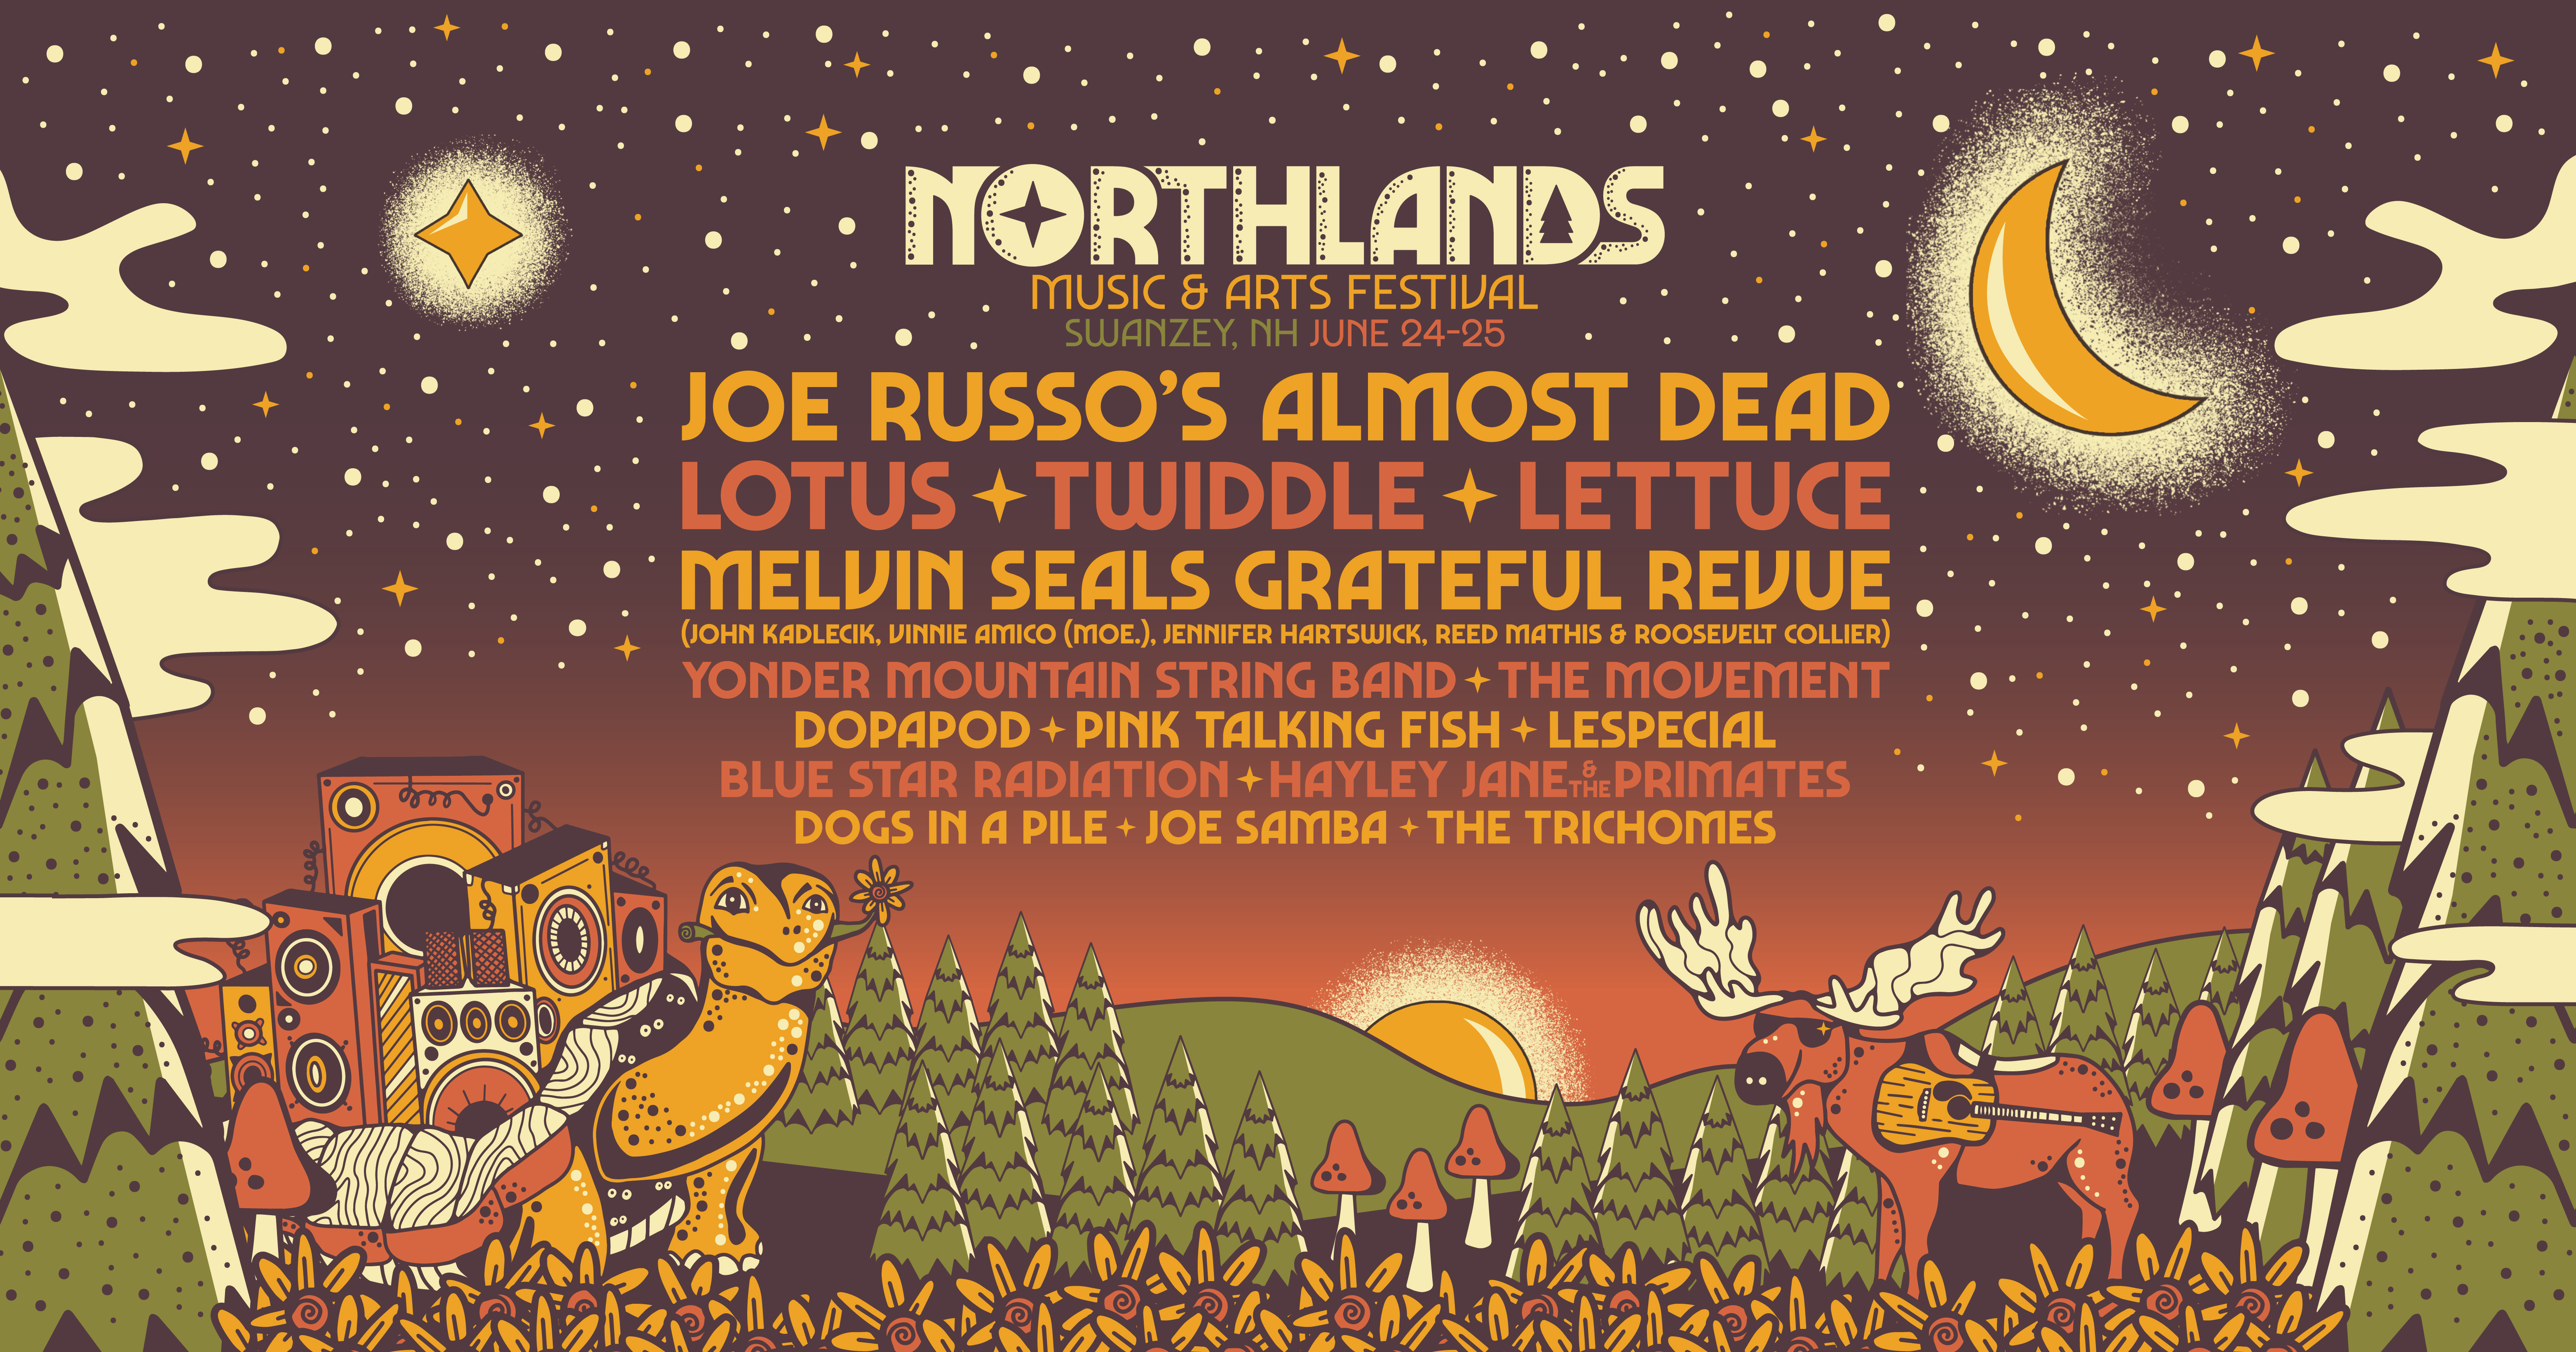 Northlands Festival Brings a Weekend of Music, Food Trucks, Craft Vendors, Art & More!